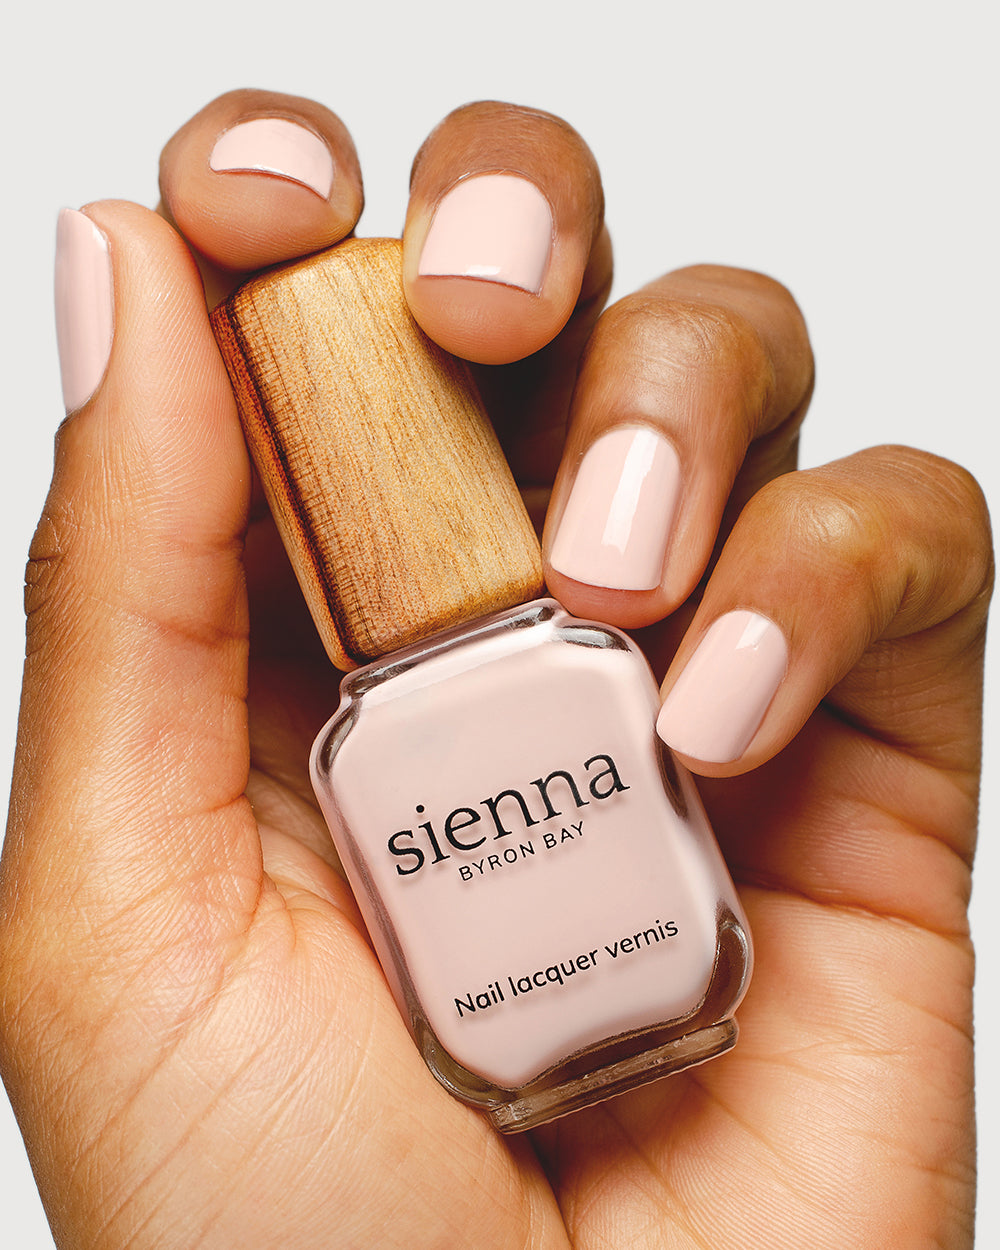 Light champagne pink nail polish hand swatch on medium skin tone up-close holding sienna bottle